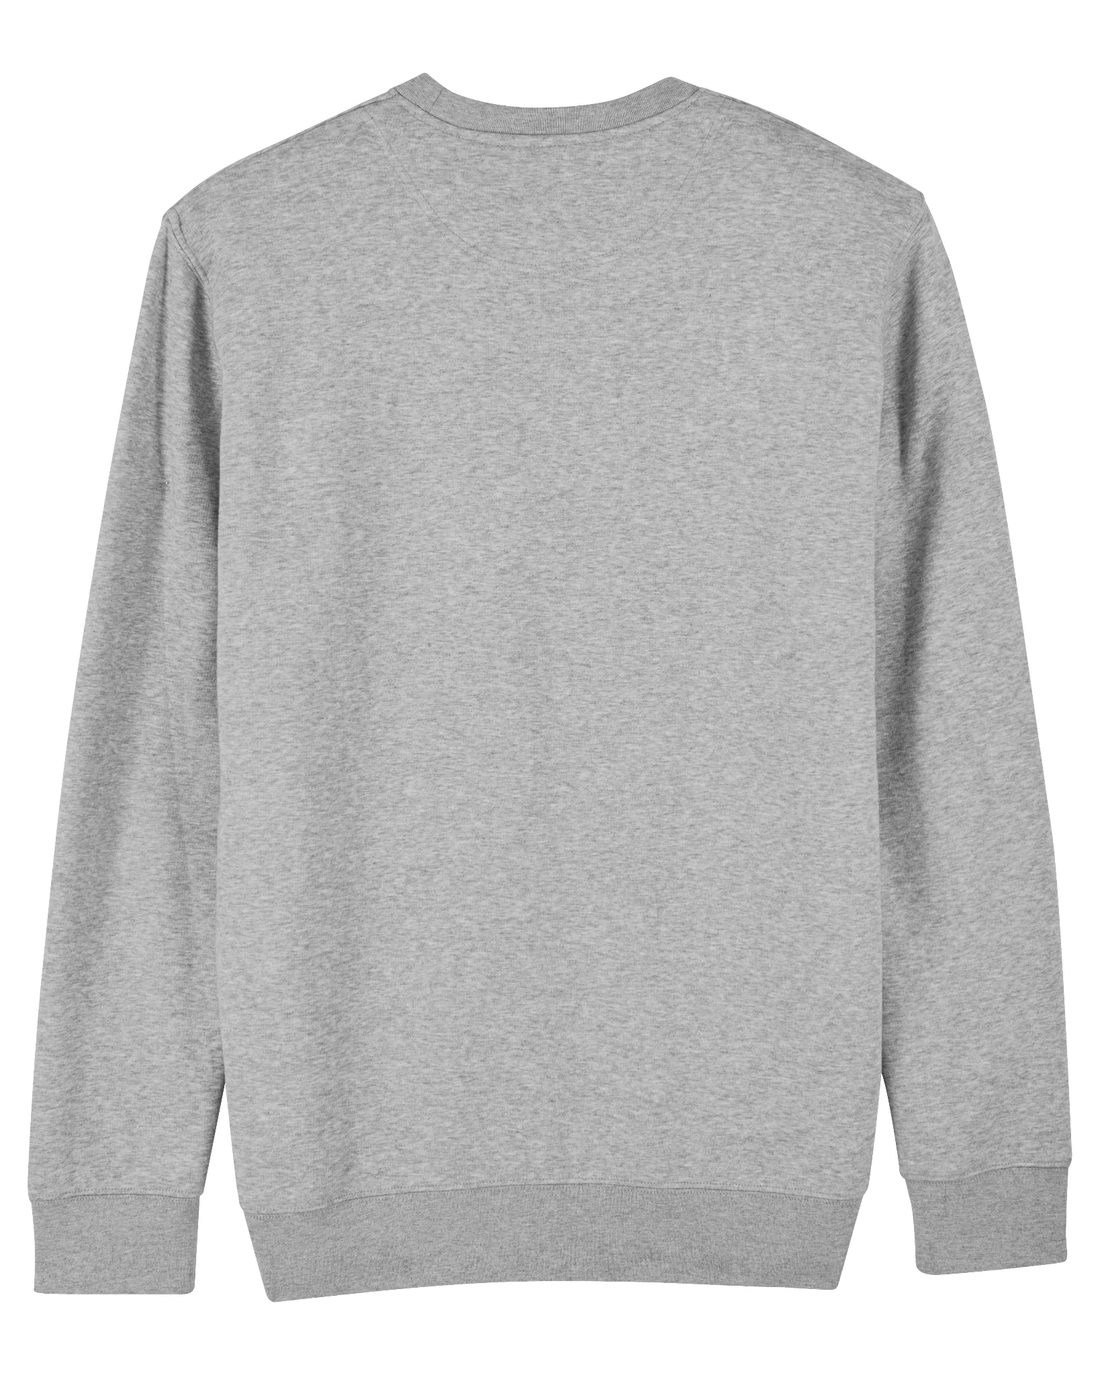 Grey Skater Sweatshirt, Skater Boy Back Print